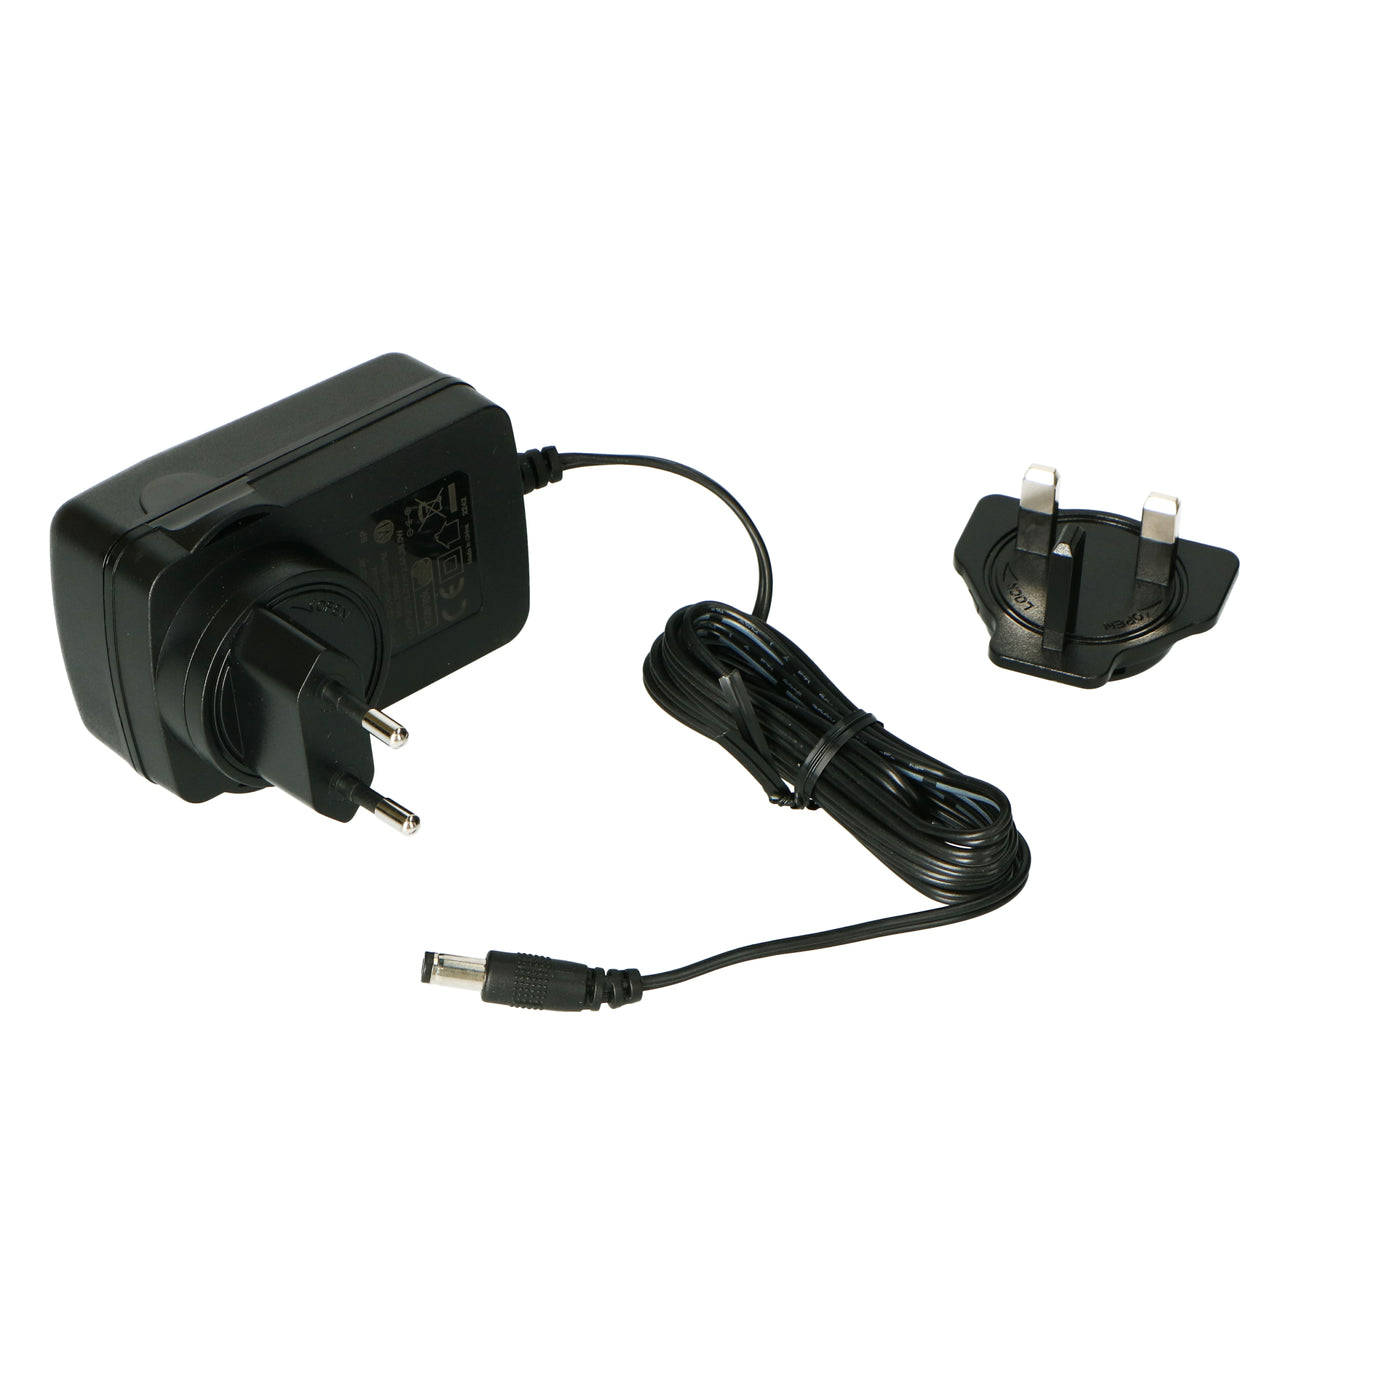 P001795 - Adapter LS-500